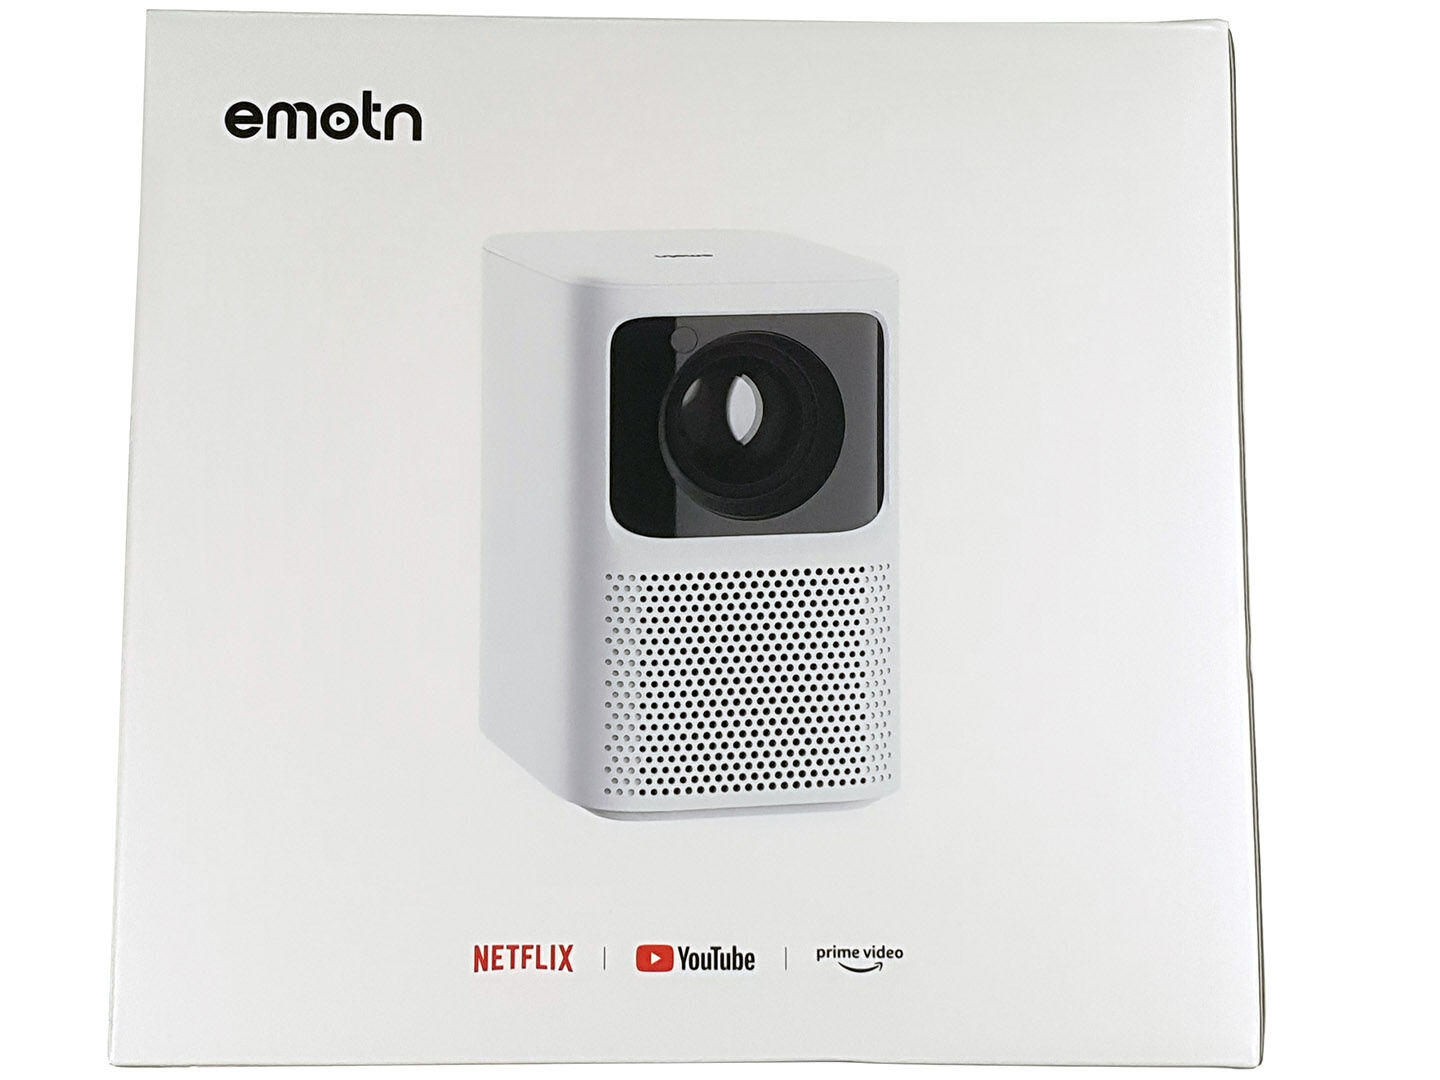 Emotn N1 1080p Smart Projector Review